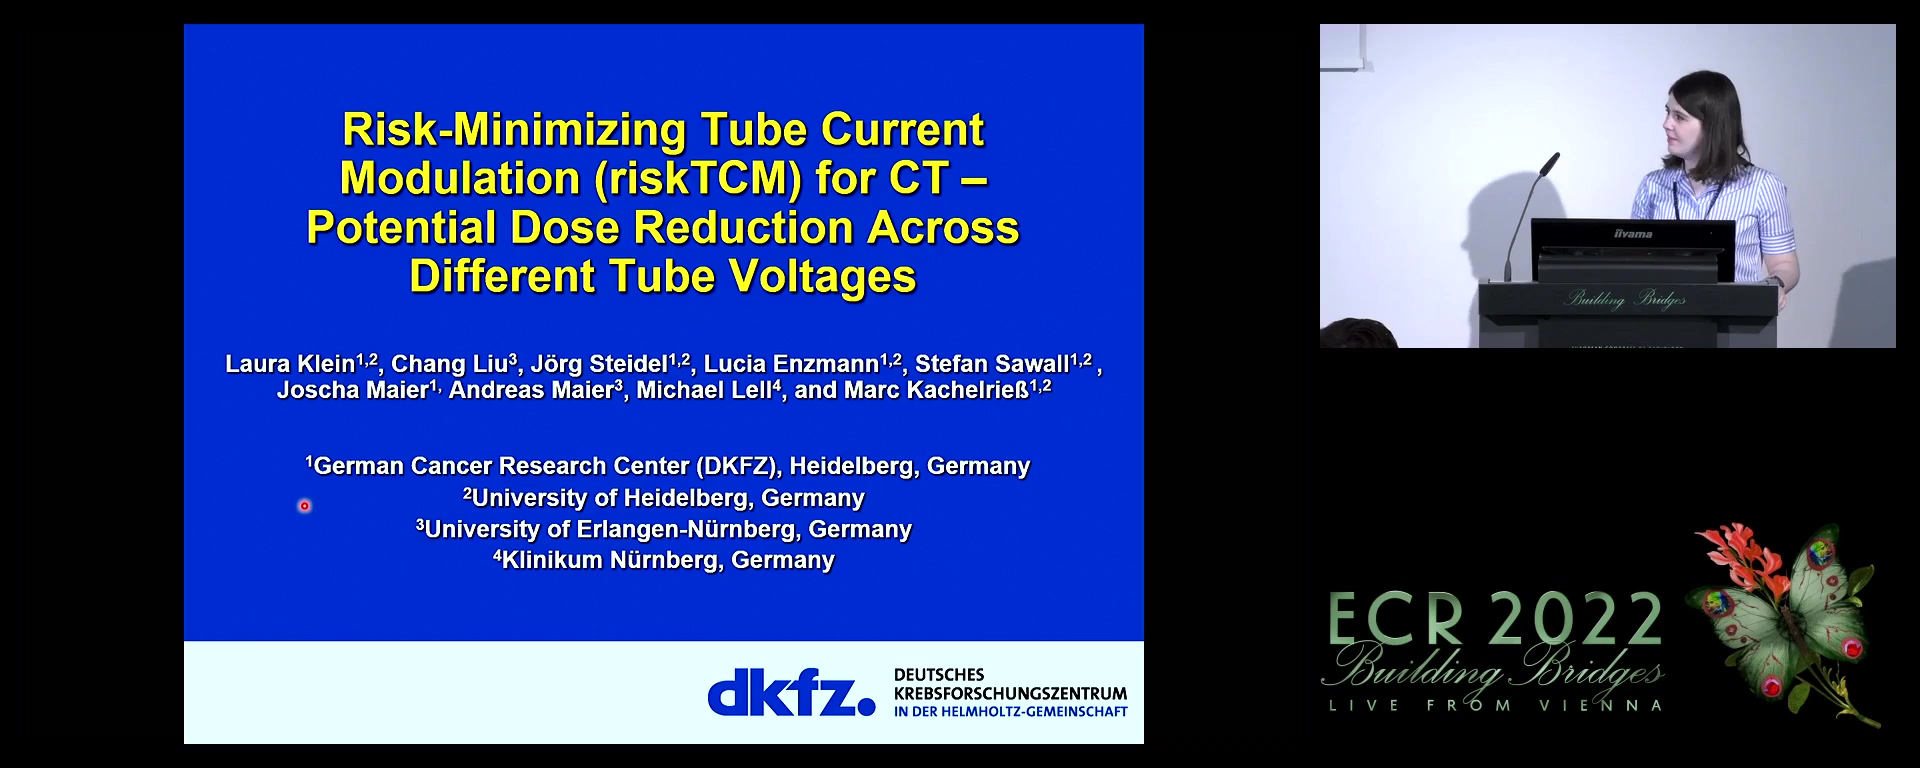 Risk-minimising tube current modulation (riskTCM) for CT: potential dose reduction across different tube voltages - Laura Klein, Heidelberg / DE